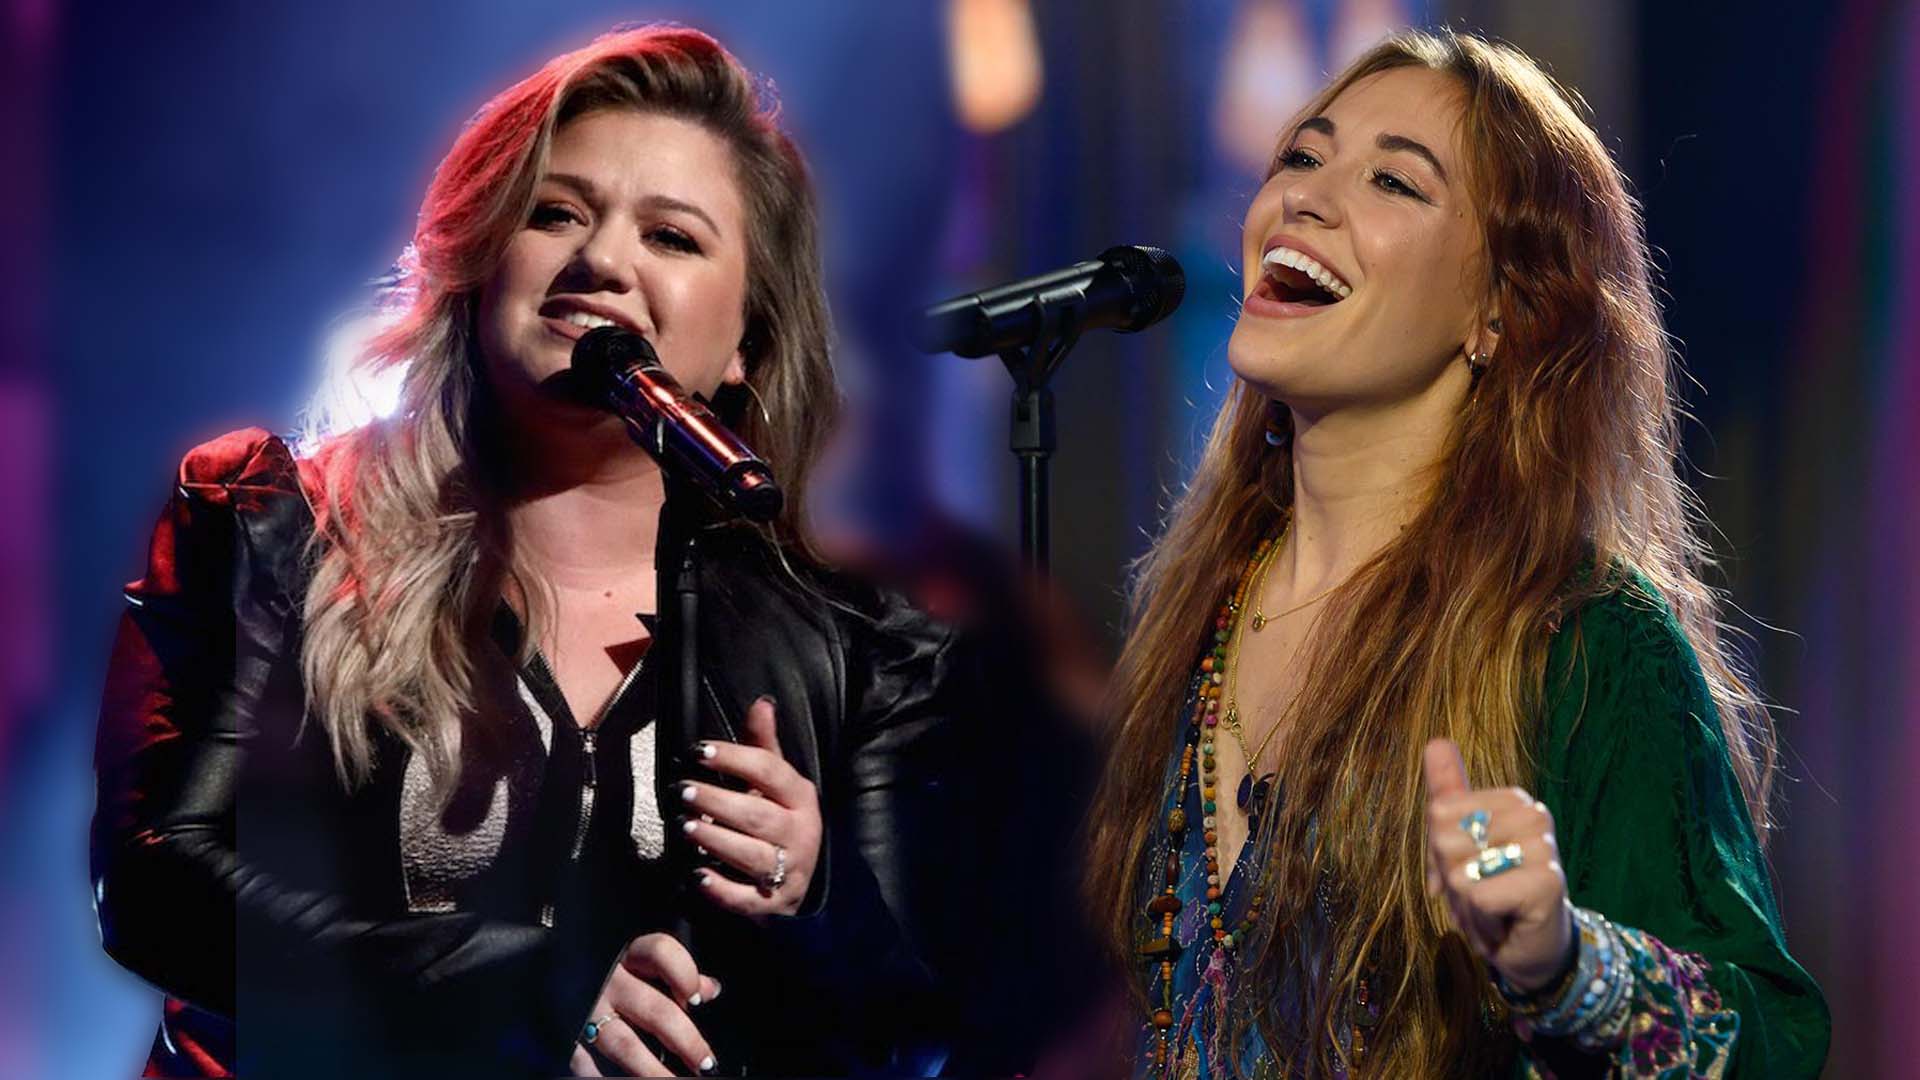 Kelly Clarkson Covers Lauren Daigle's "Rescue"